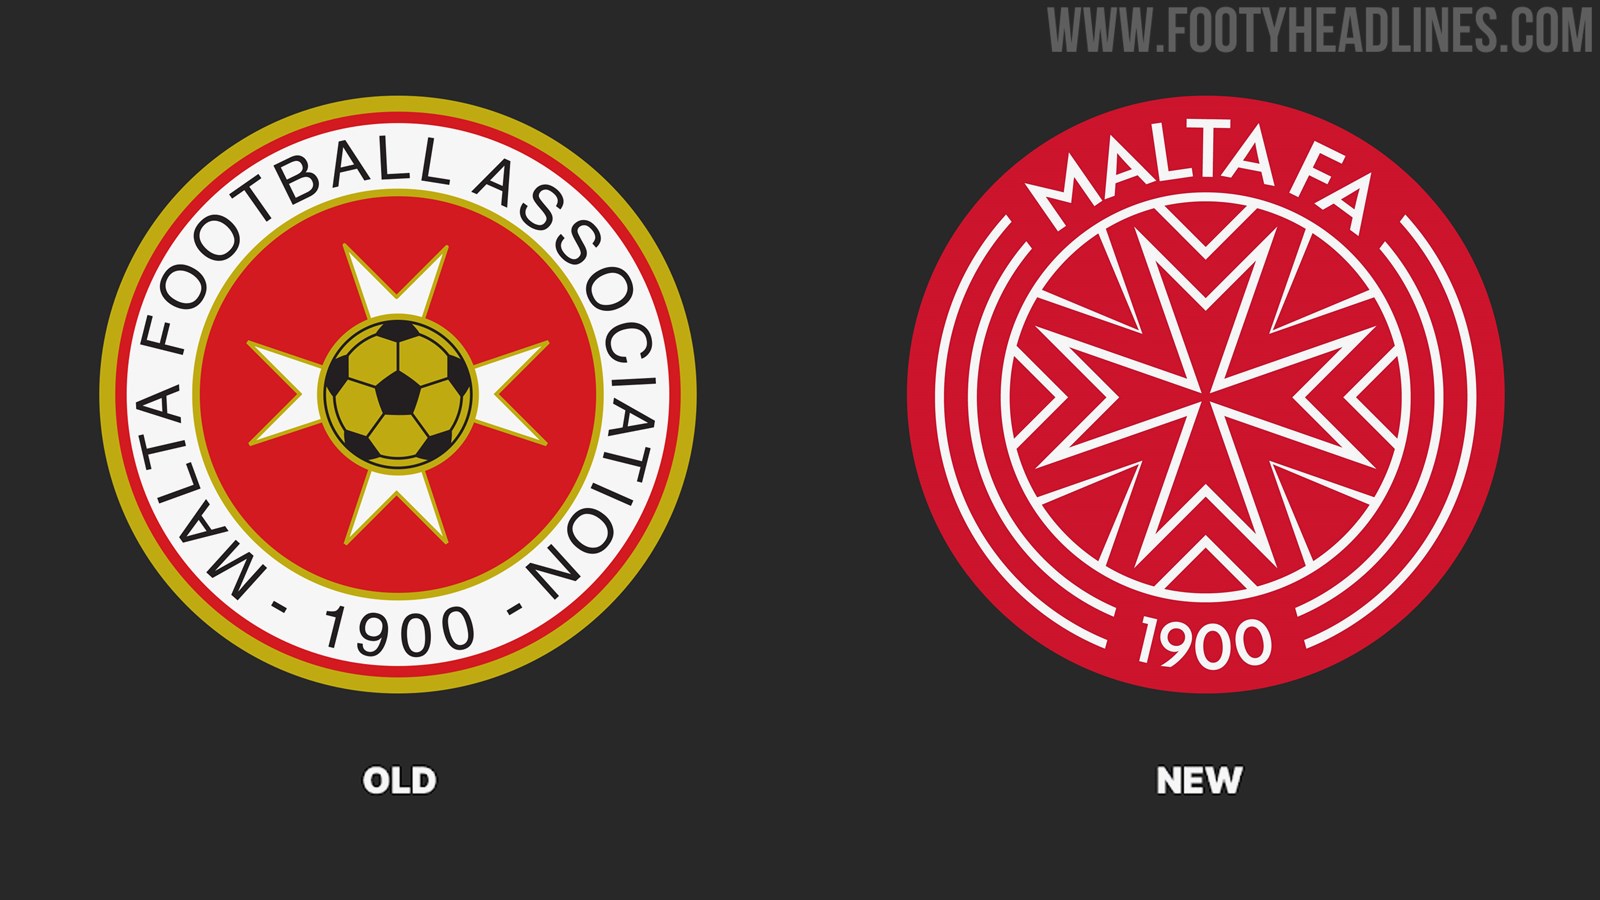 World Football Badges News: Malta - 2017/18 First Division